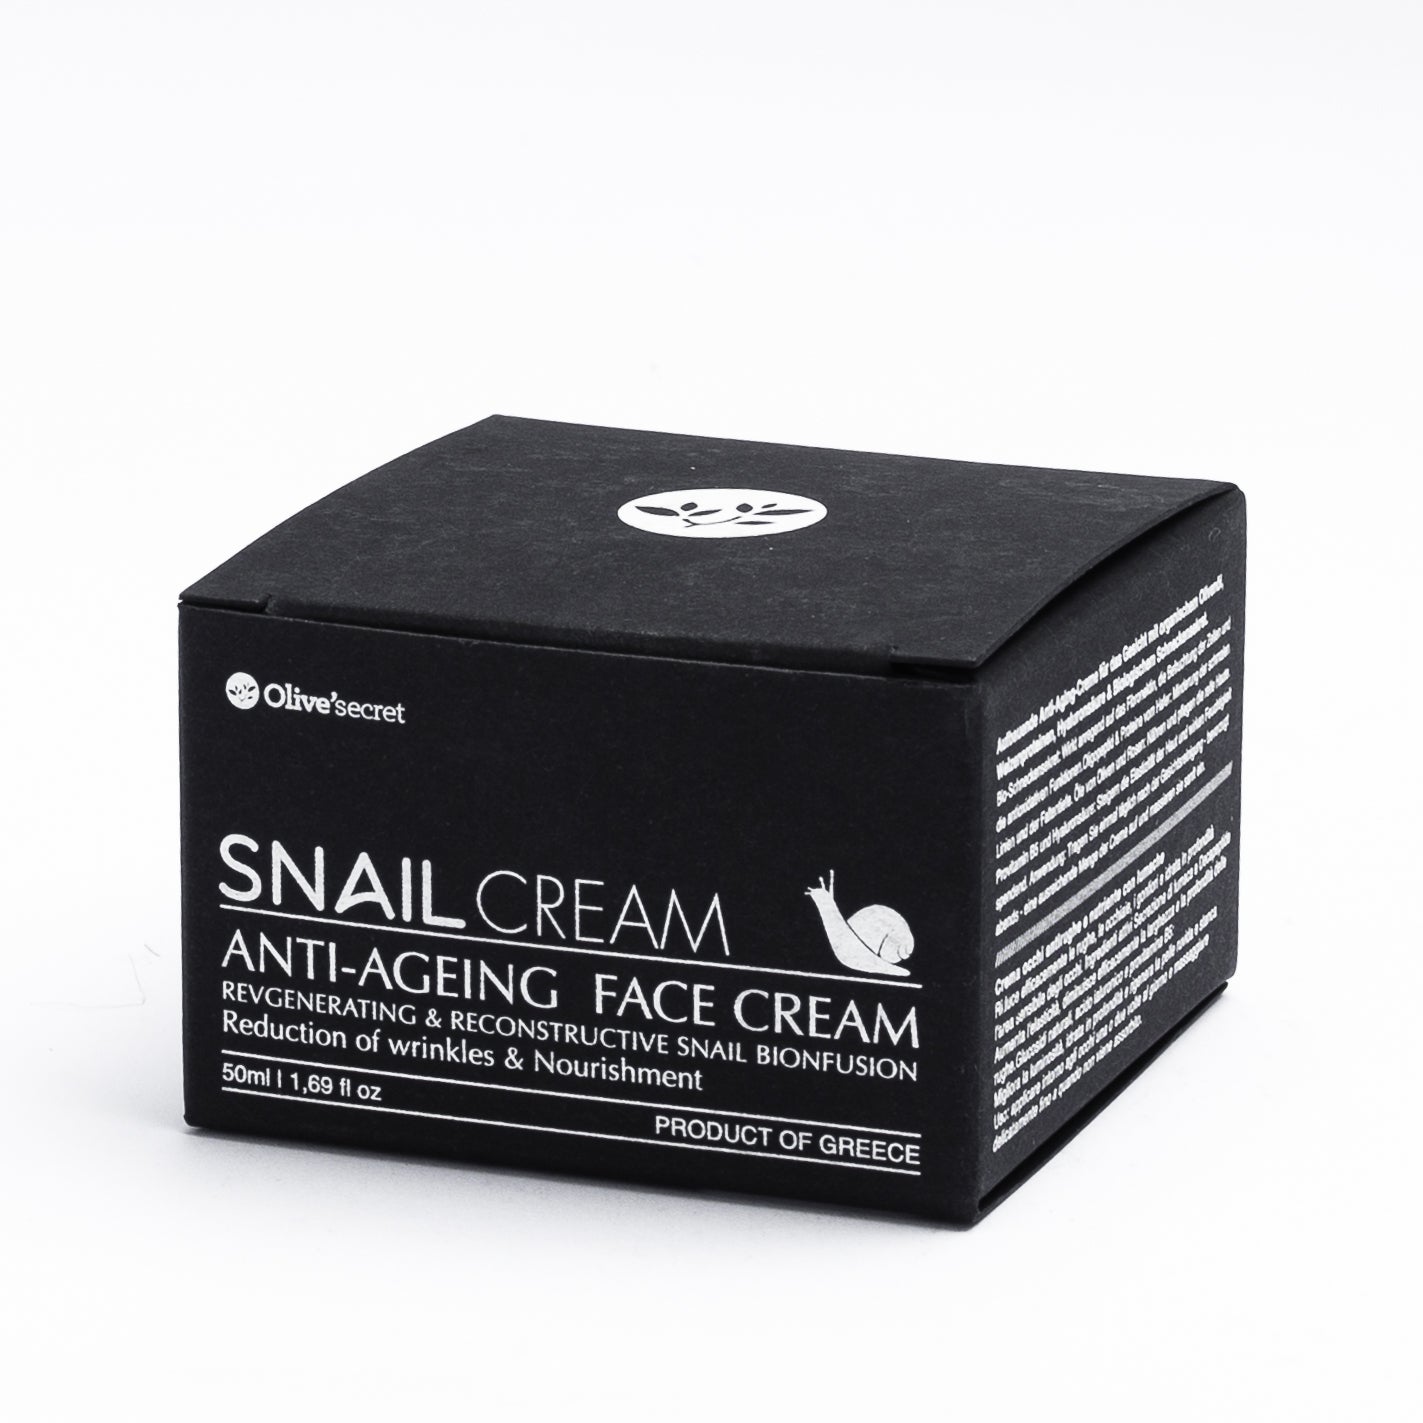 Olive Secret Snail Anti-Aging Face Cream, 50ml